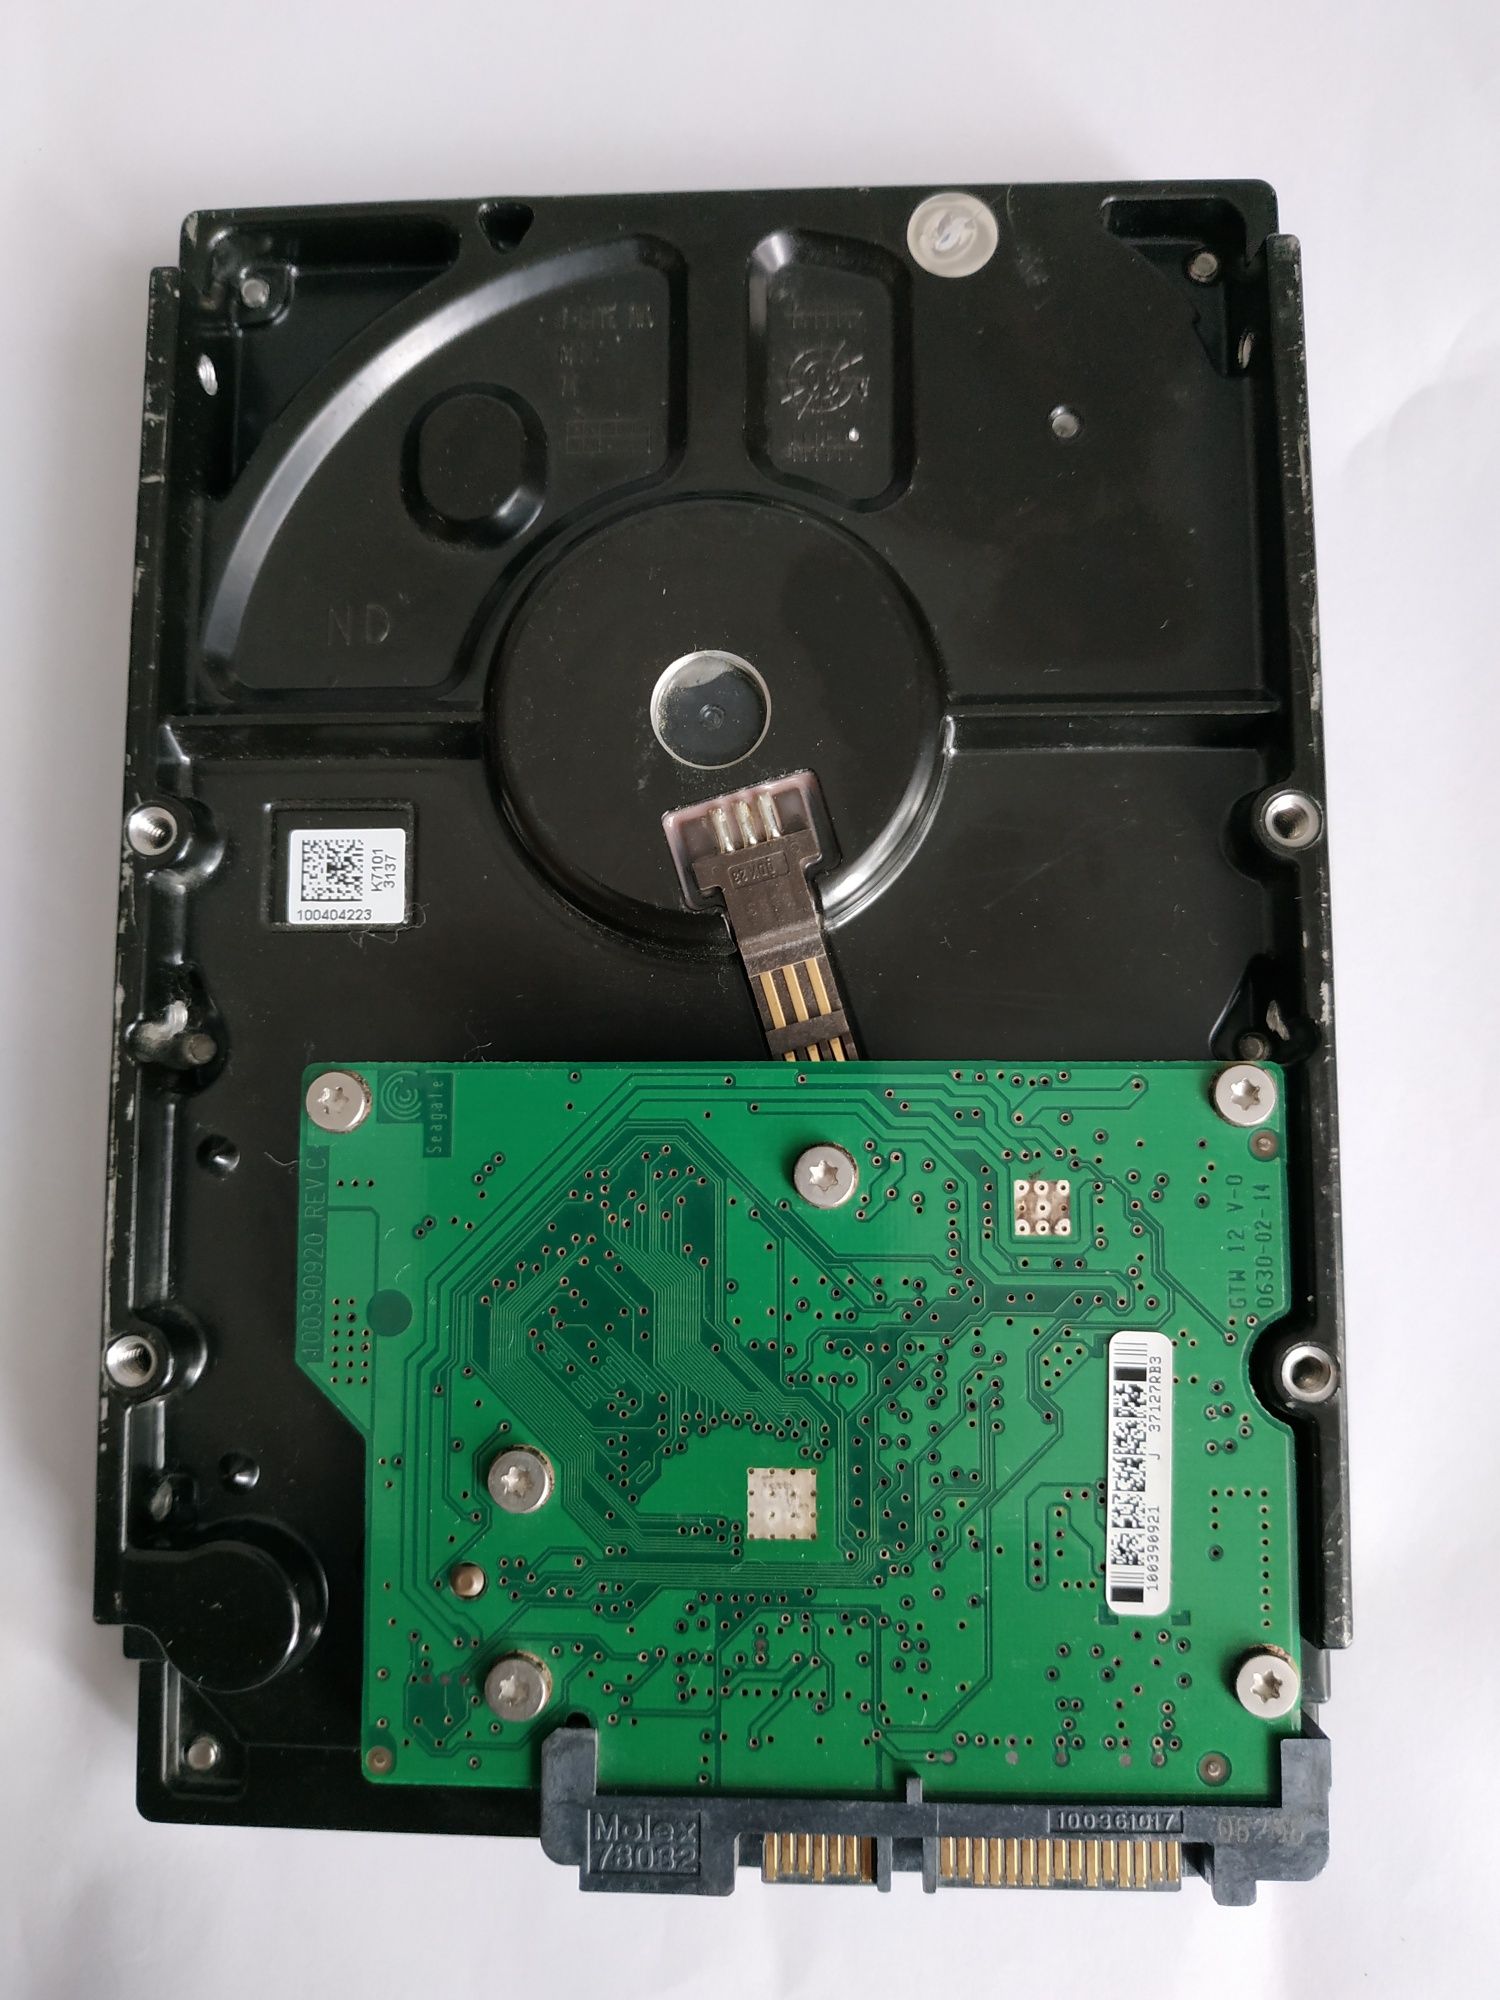 Жорсткий диск Seagate Baracuda 7200.9 
160 Gb.